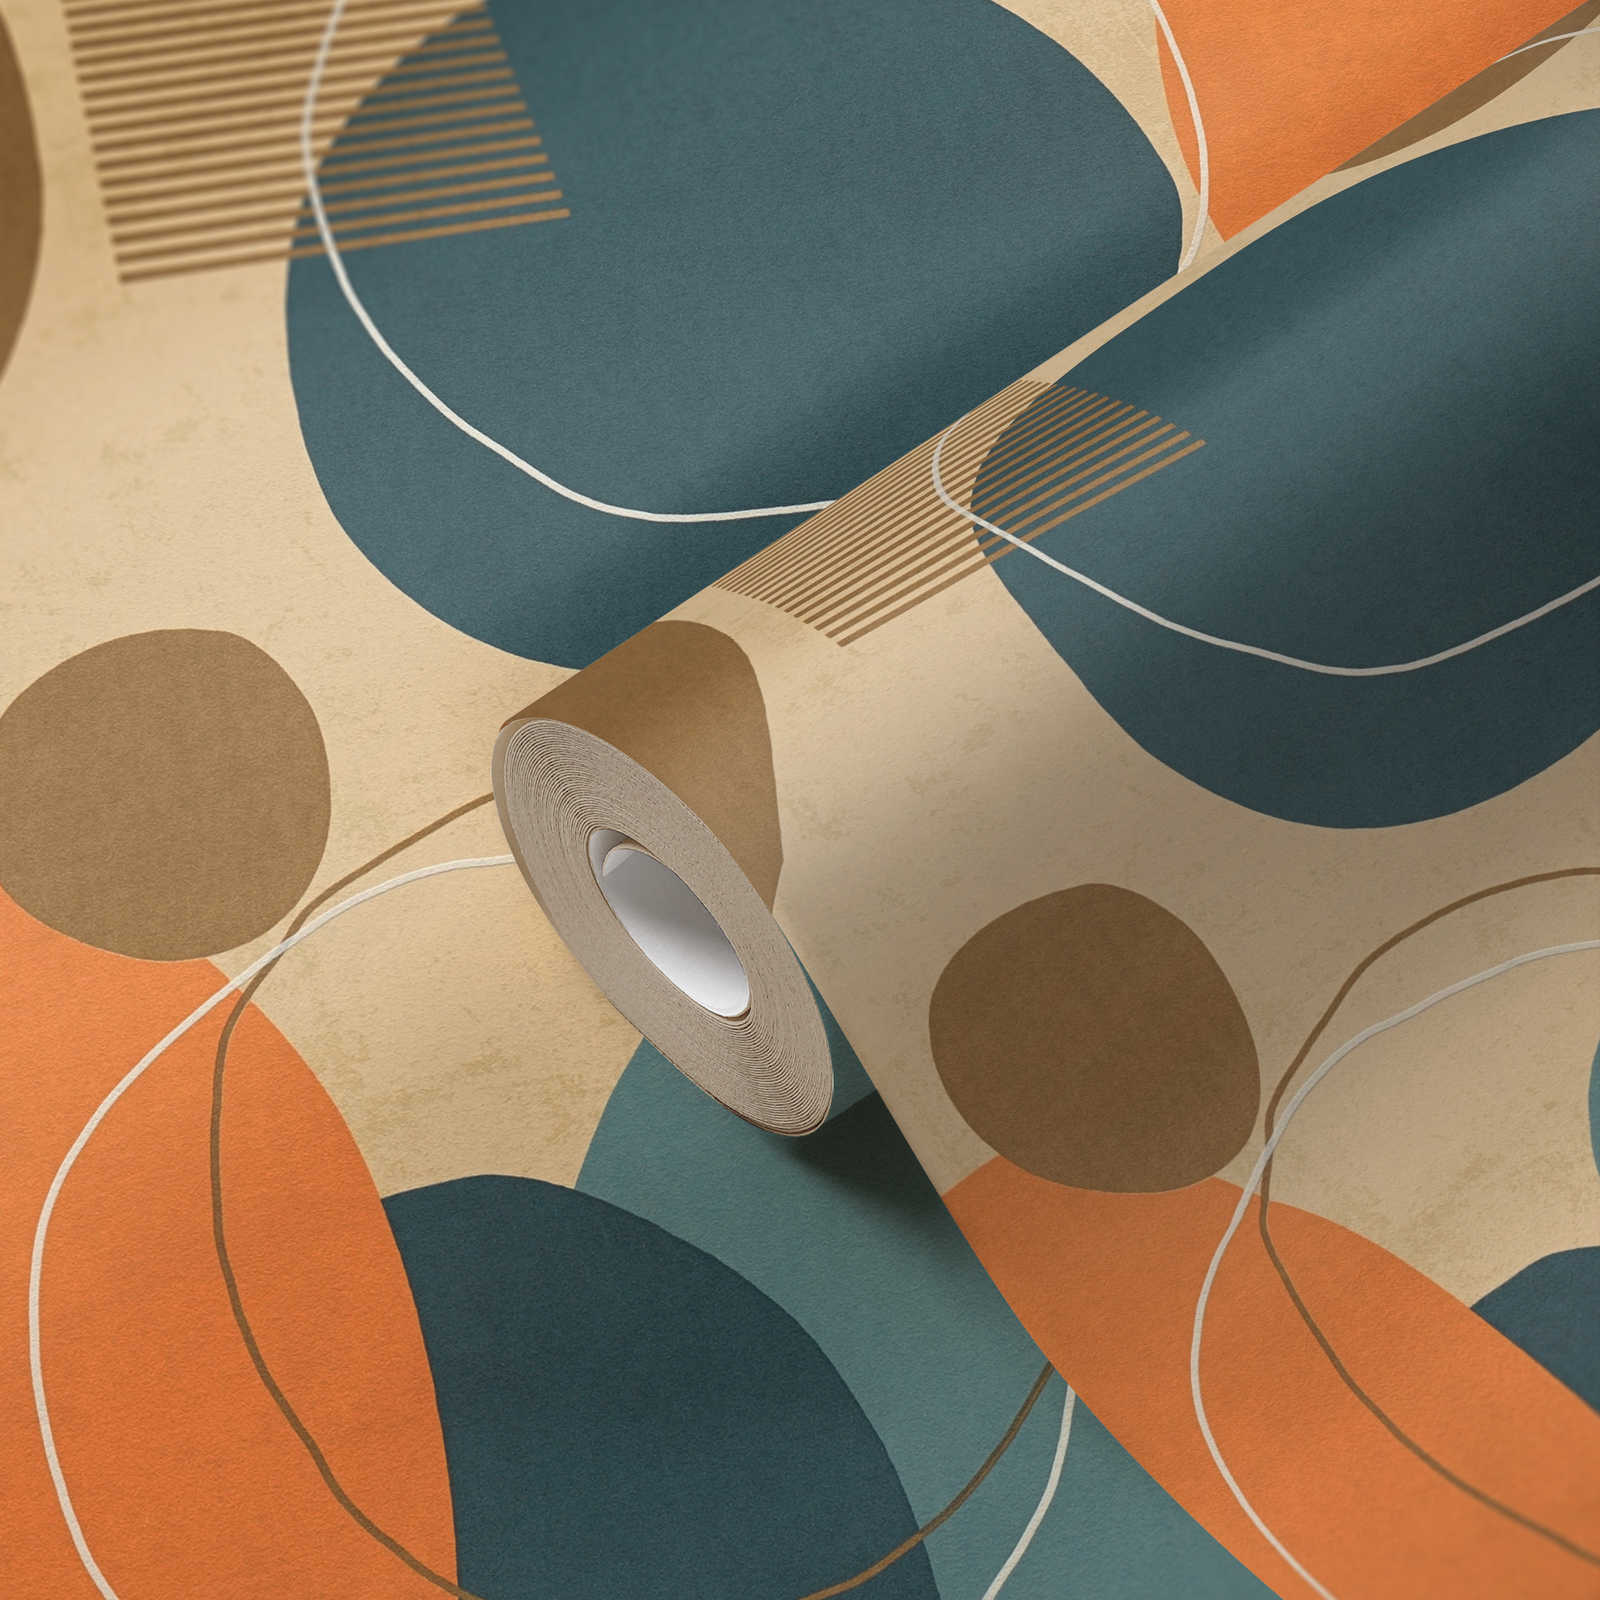             Retro Tapete Mid Century Modern Muster – Orange, Braun, Blau
        